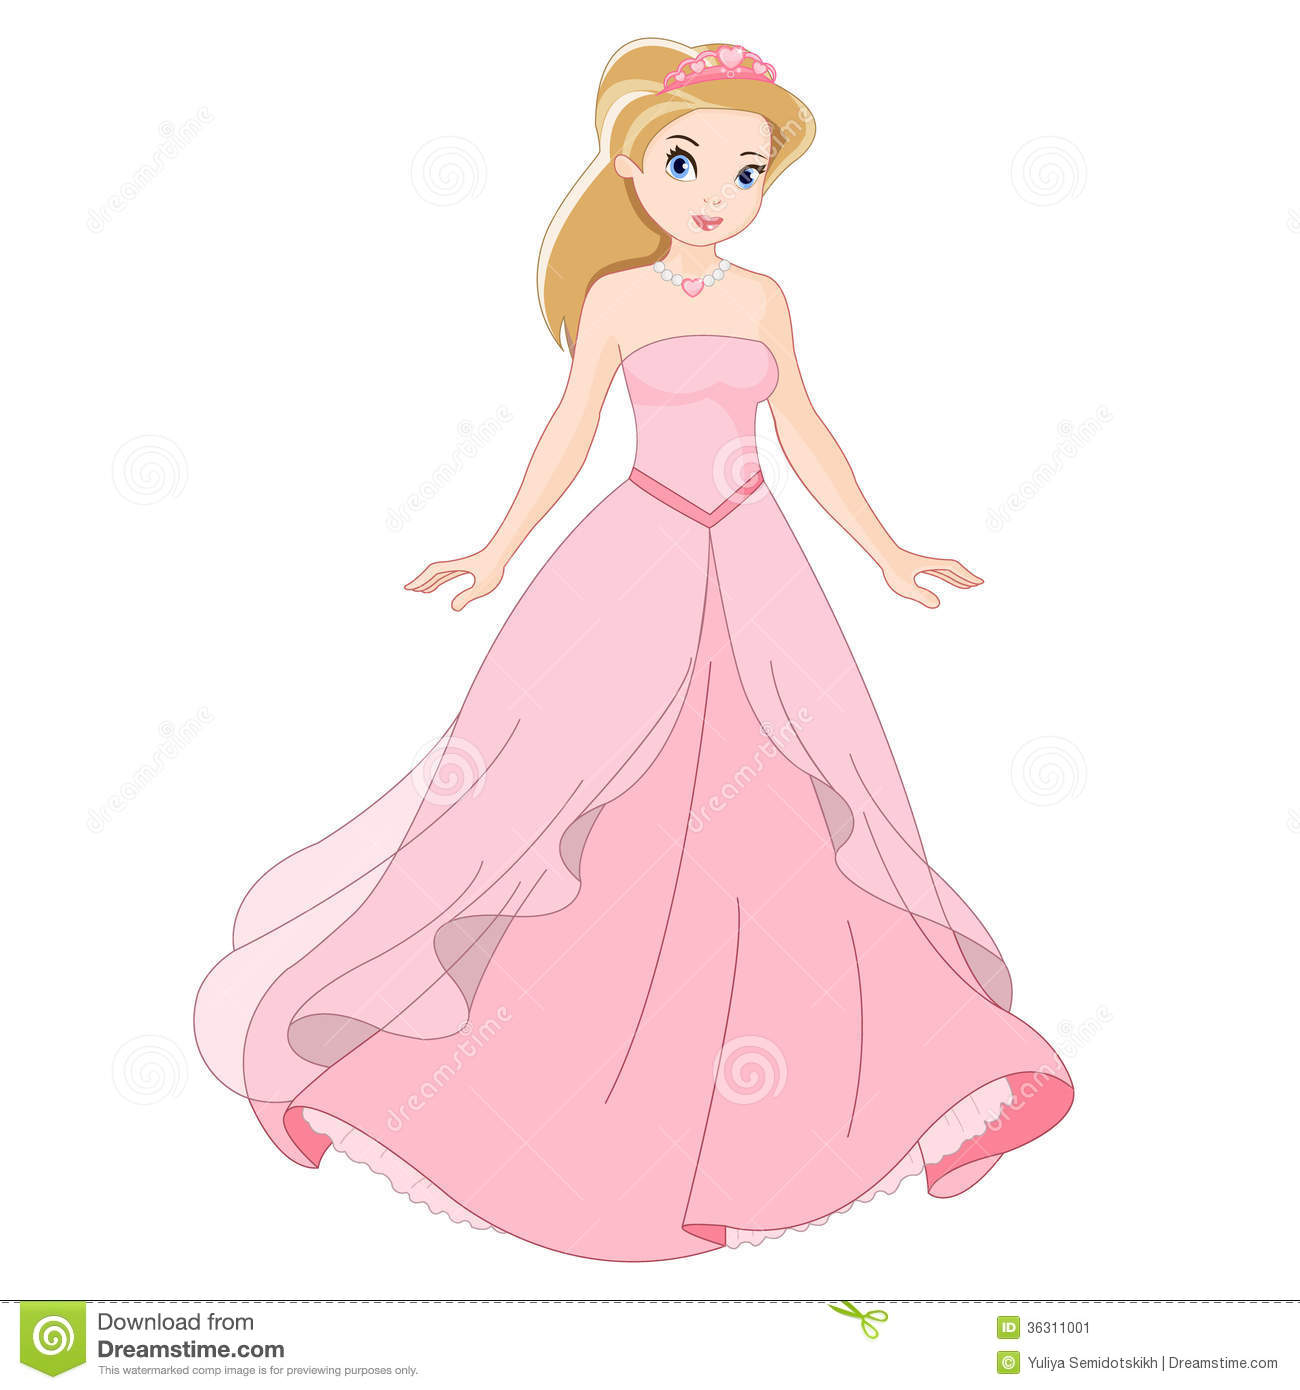 Fairytale Princess Stock Image   Image  36311001